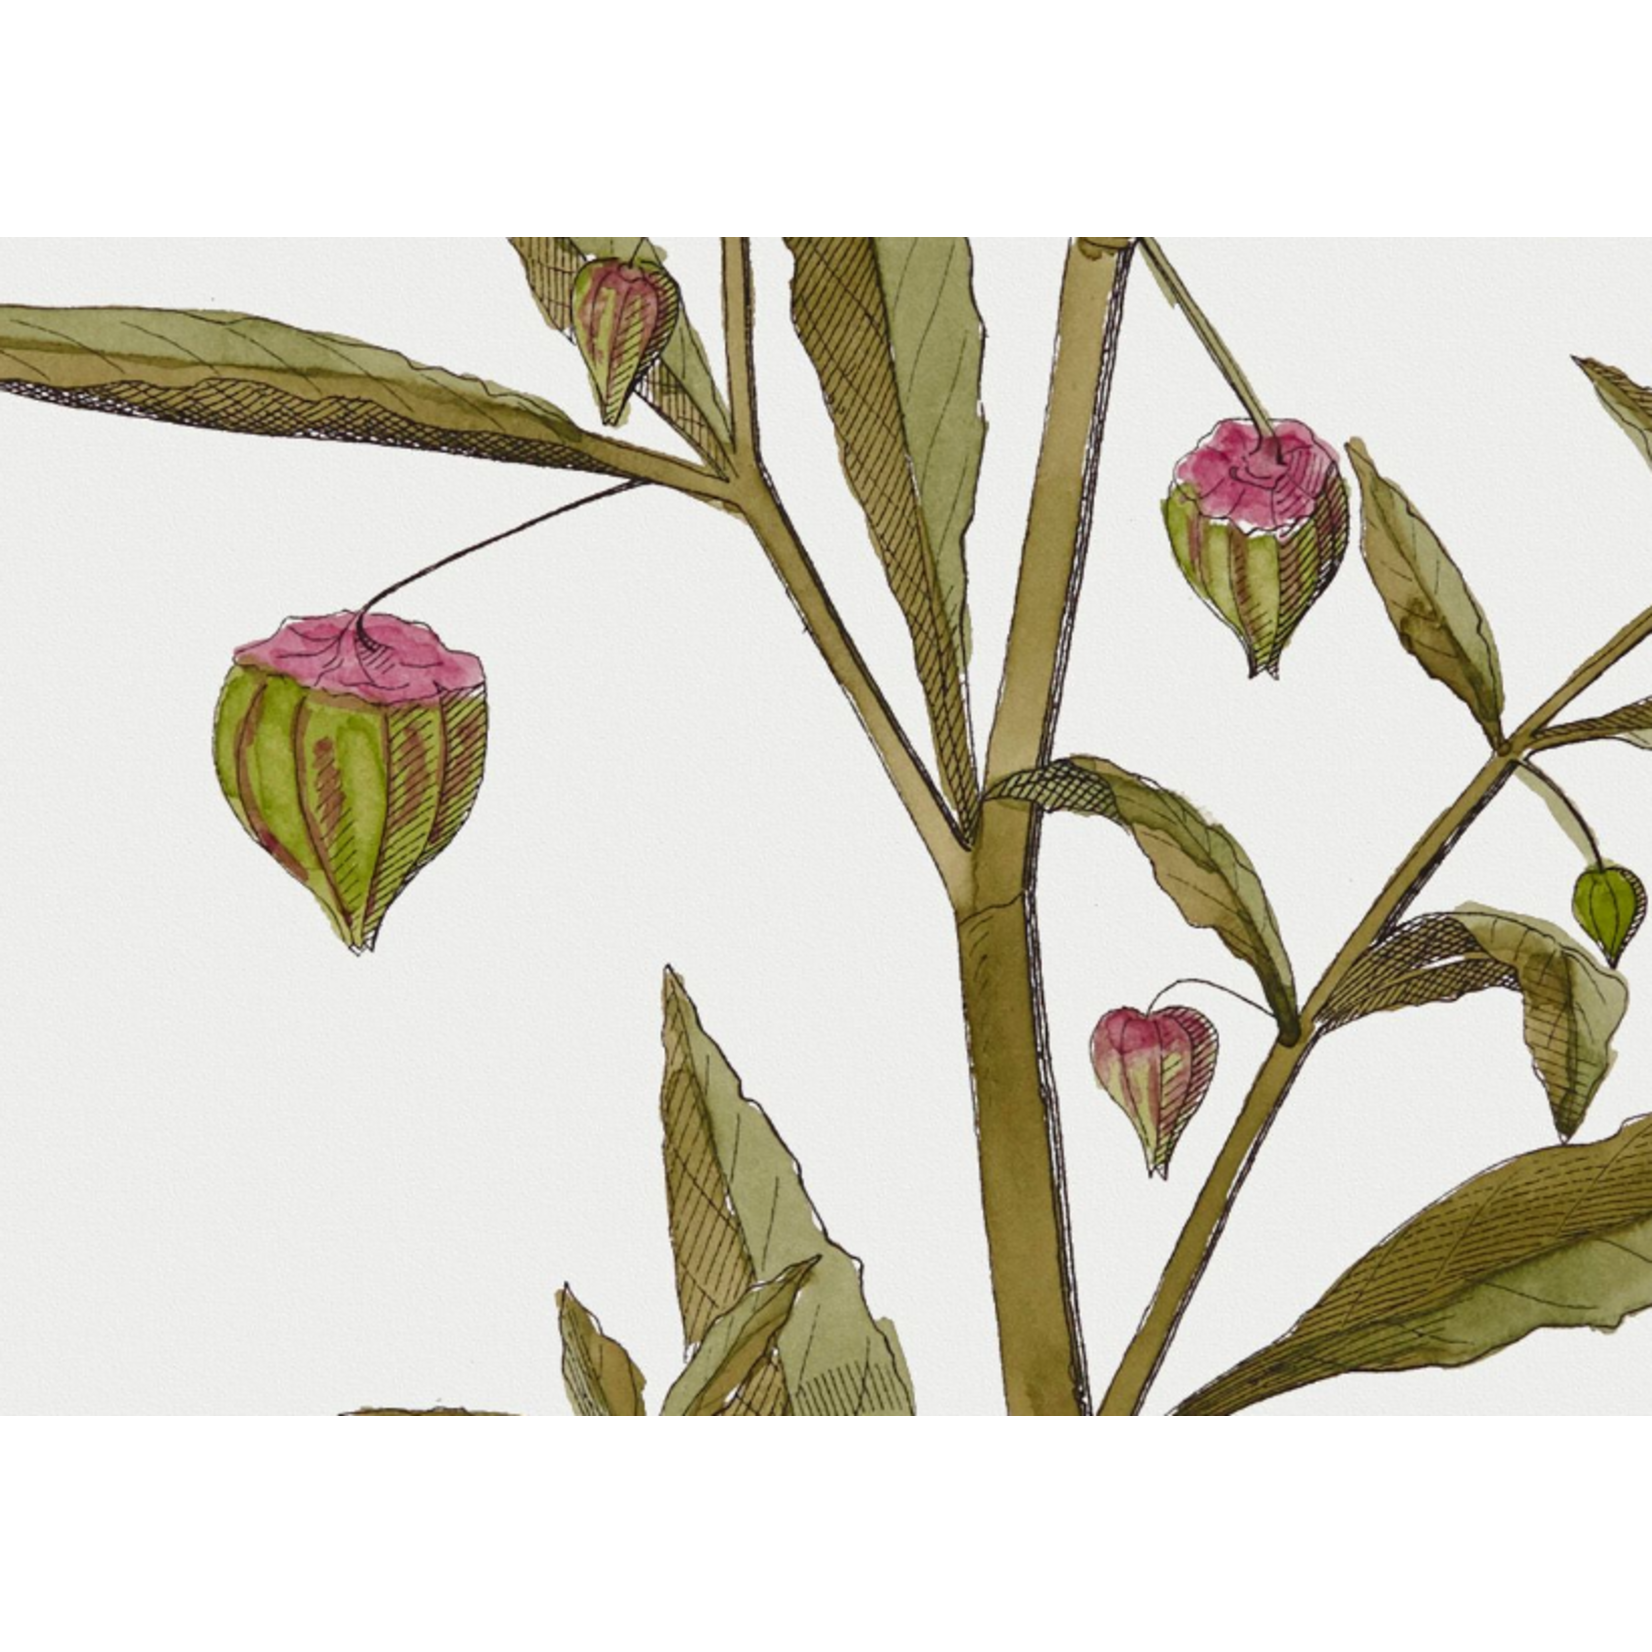 The Picturalist | Fine Art Prints on Paper Physalis Angulata Botanical Print